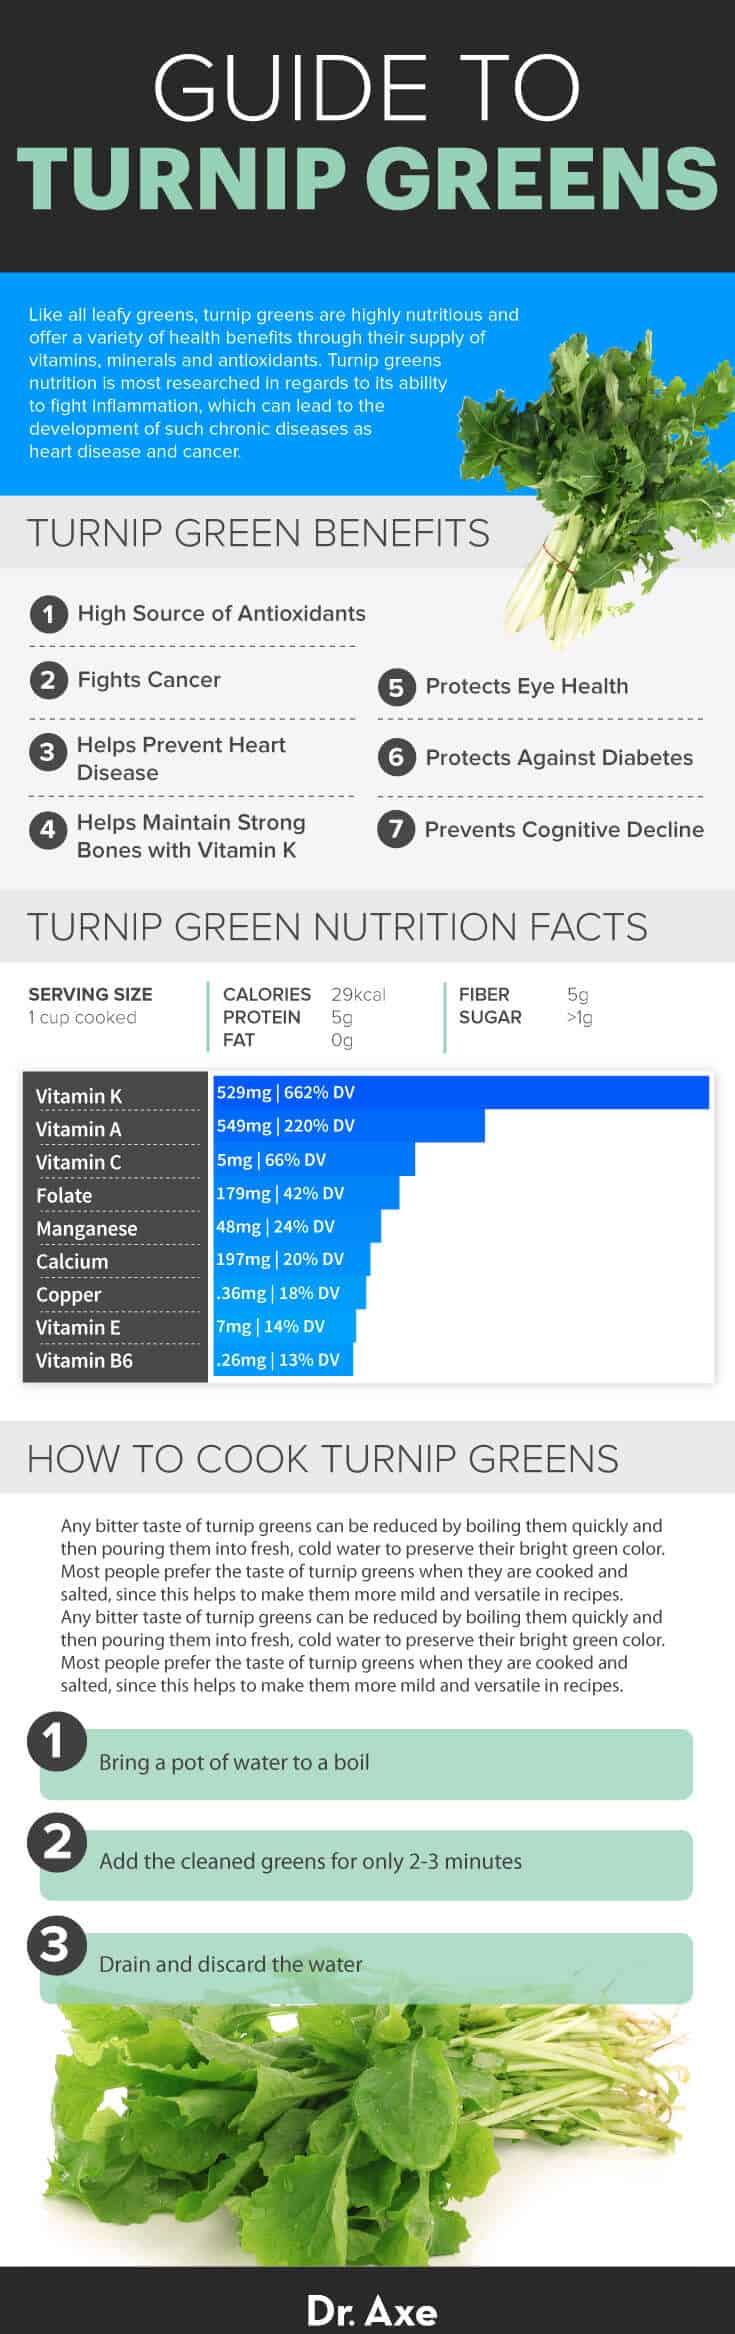 Turnip greens nutrition guide